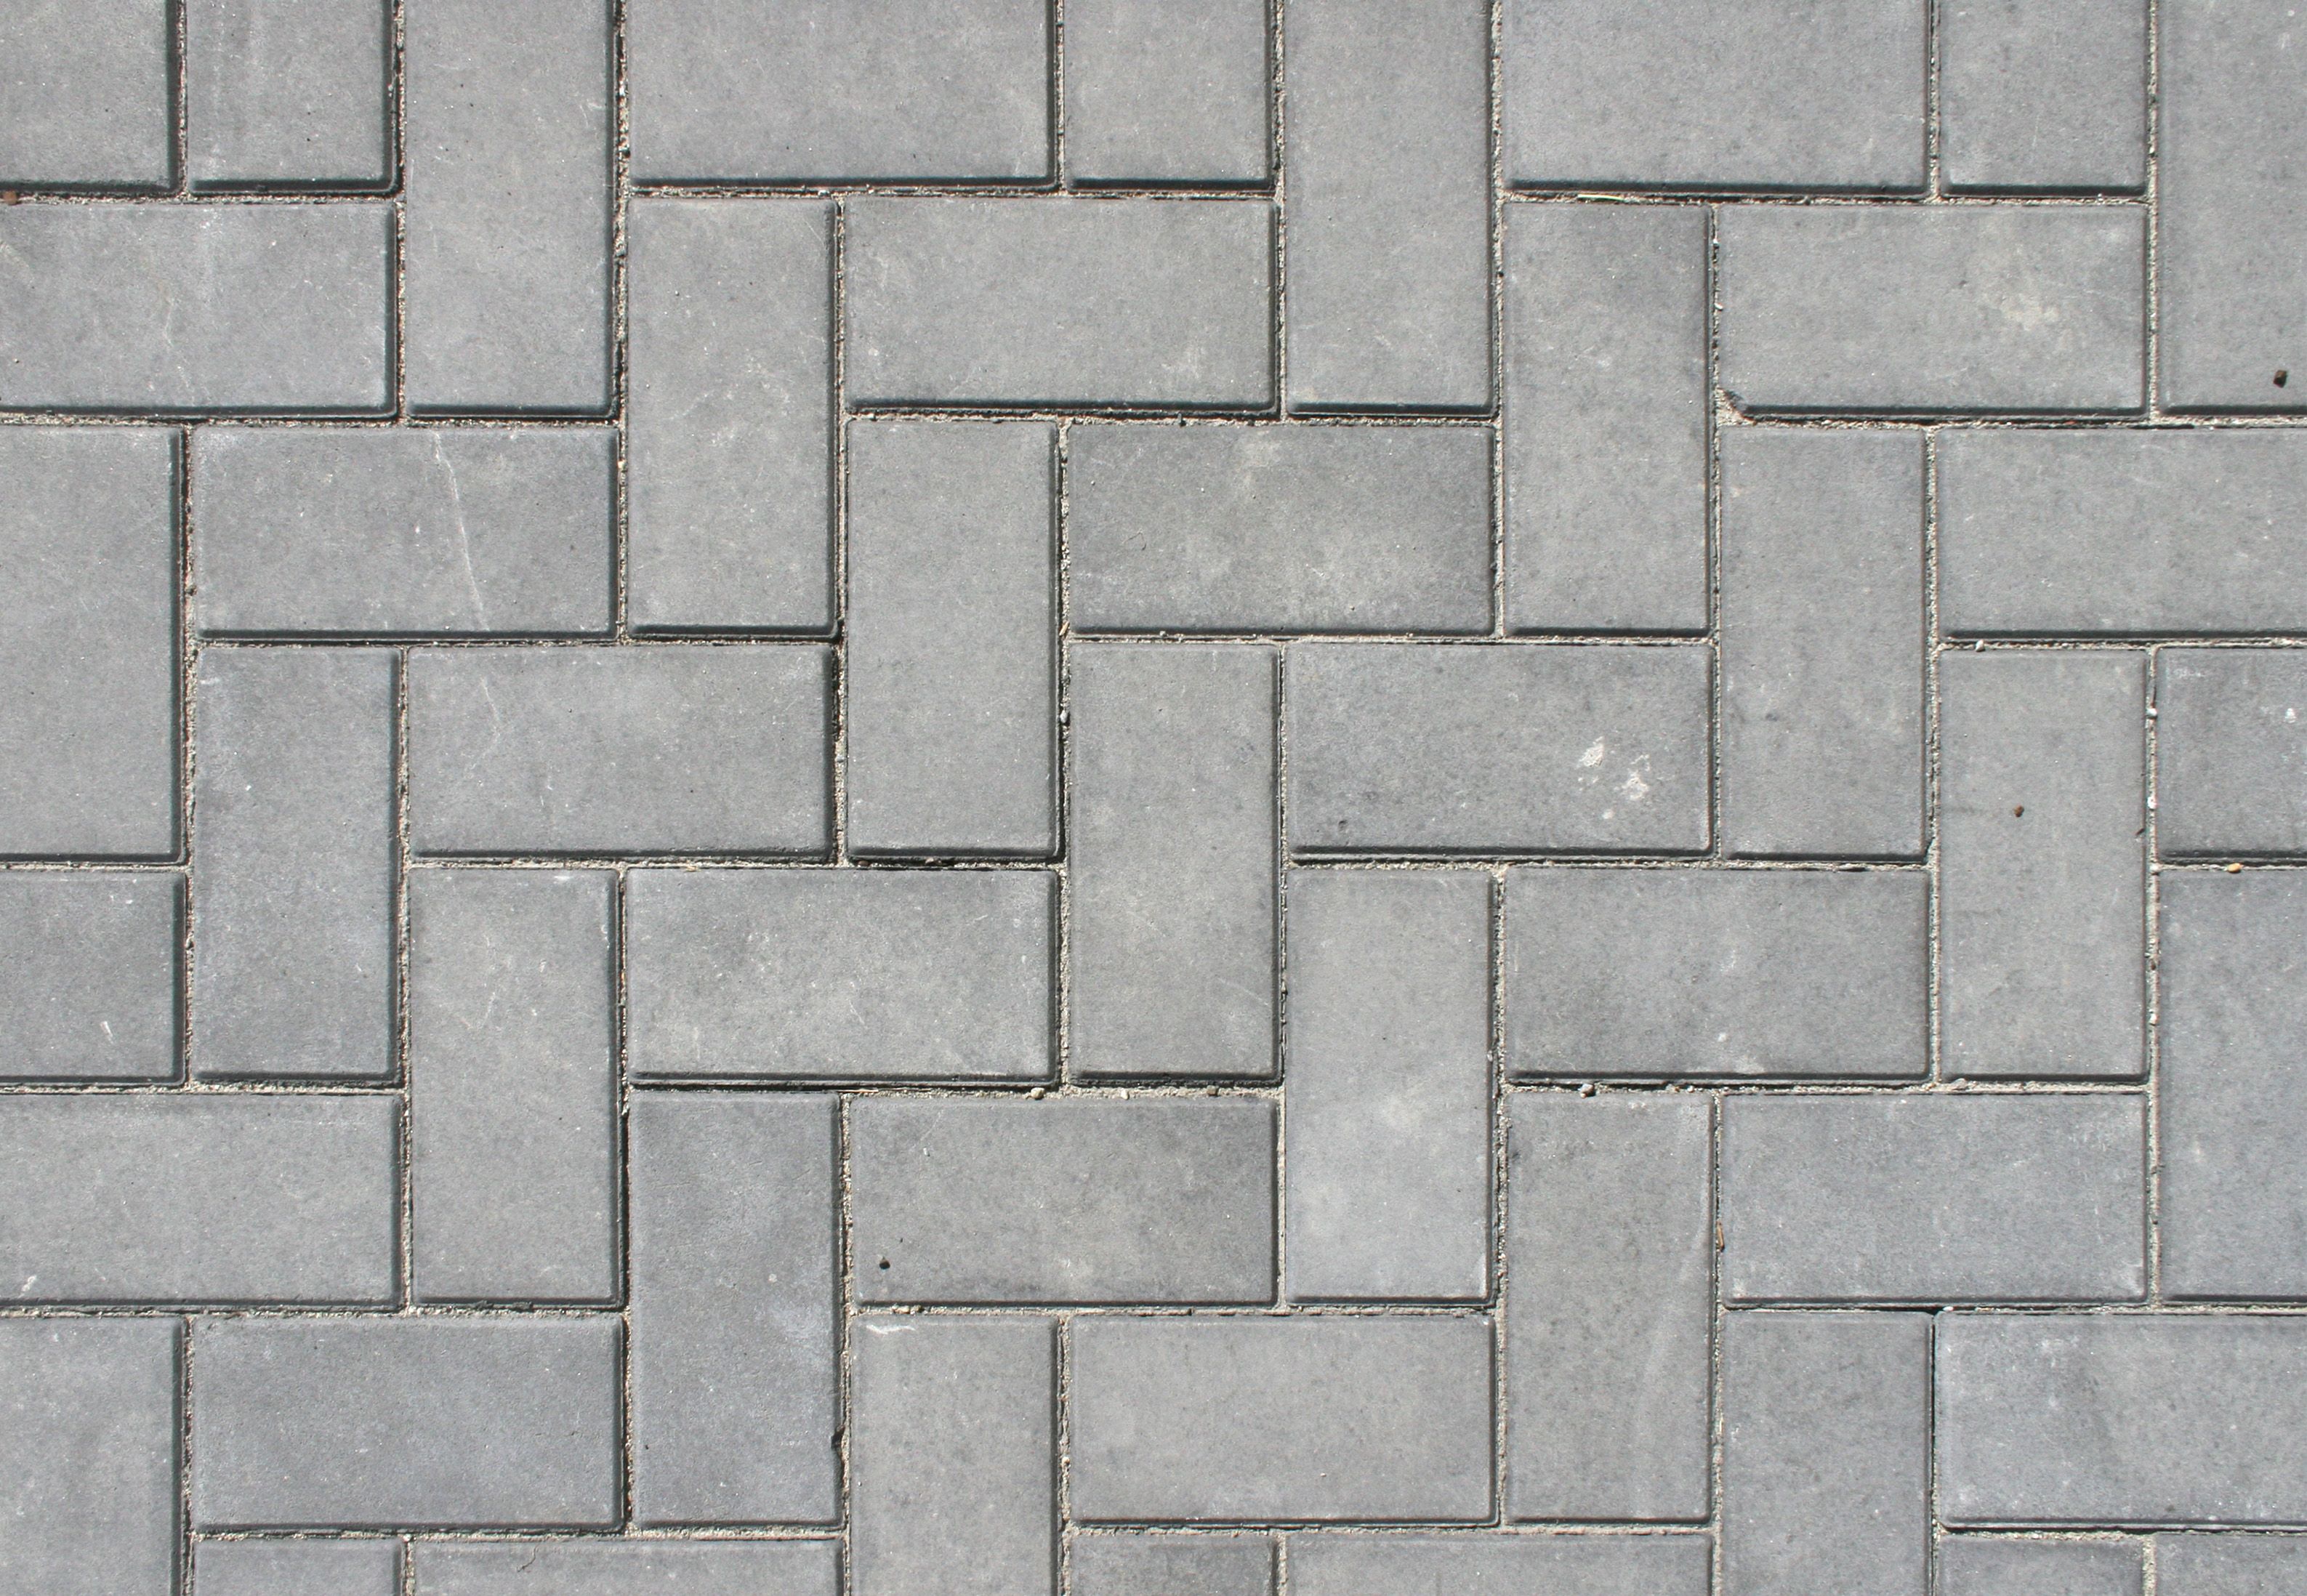 stone floor texture free image, stones | texturas | Pinterest ...